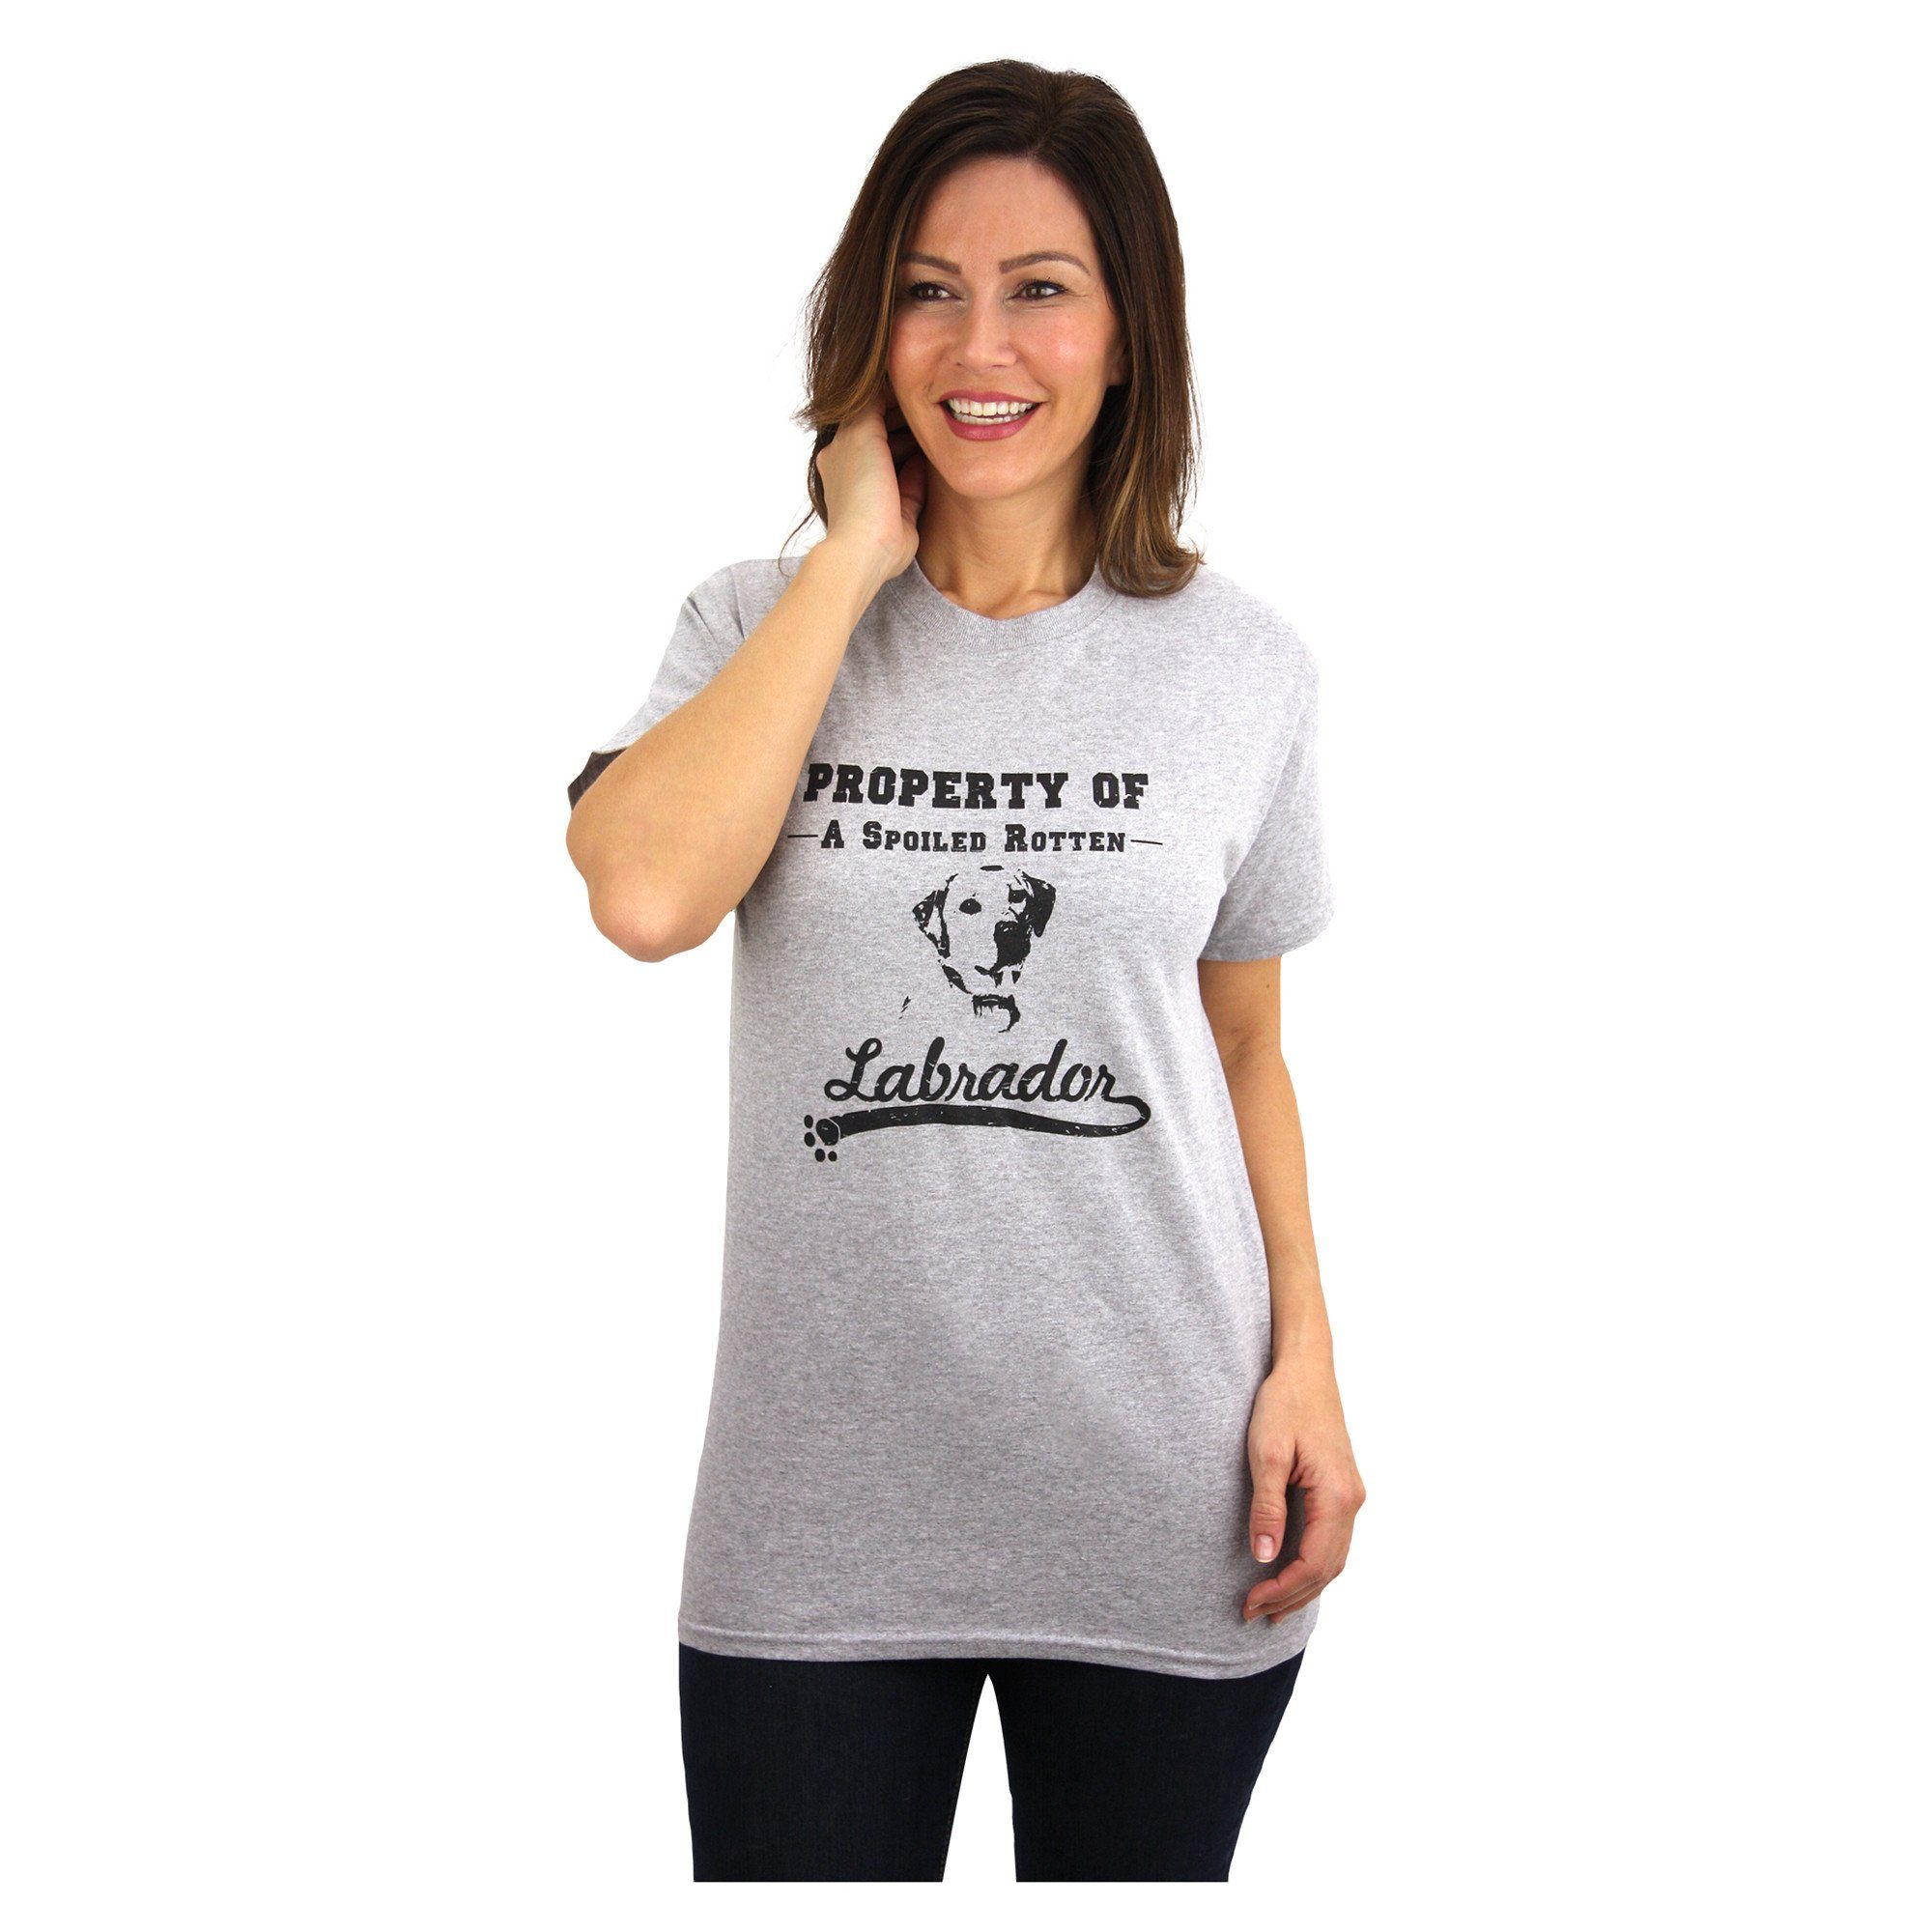 Property Of Dog Breed T-Shirt - Cocker Spaniel - S